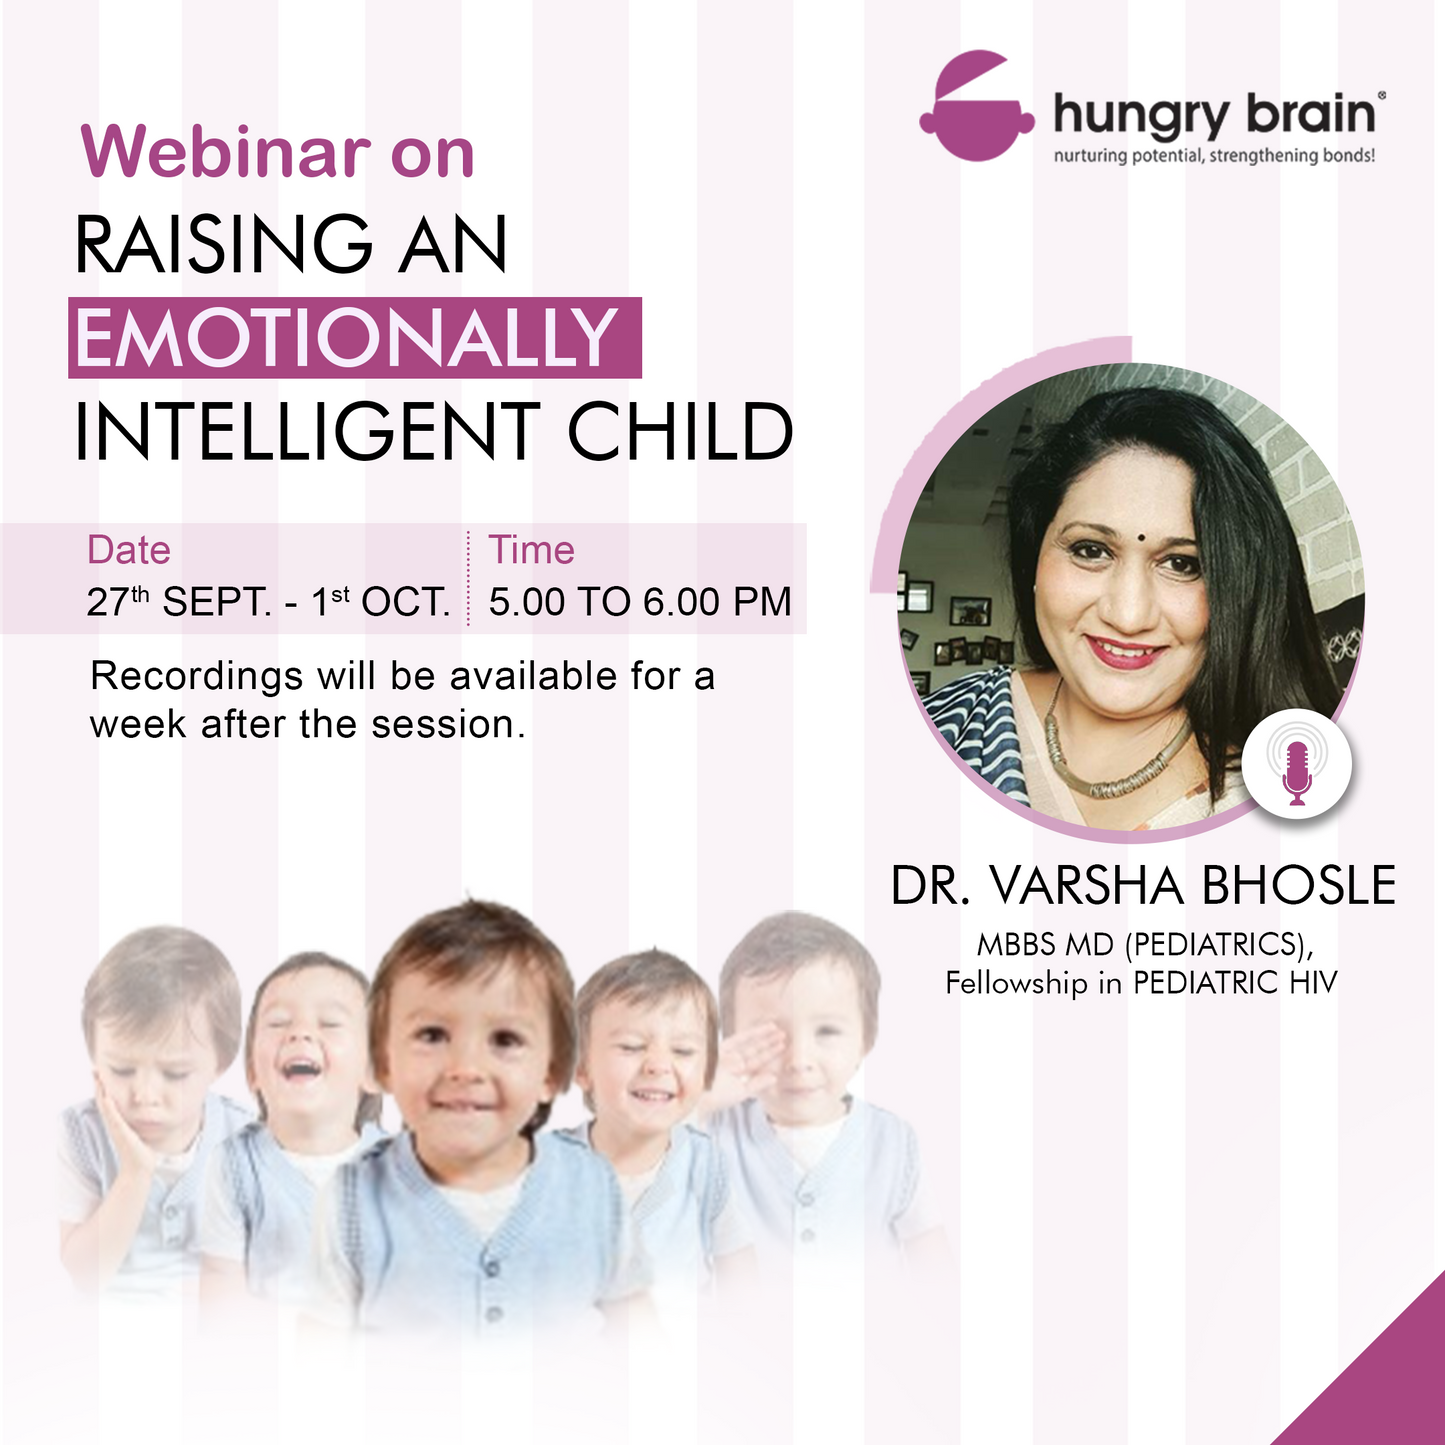 Raising an Emotionally Intelligent Child : 5 Day webinar with Dr. Varsha Bhosle